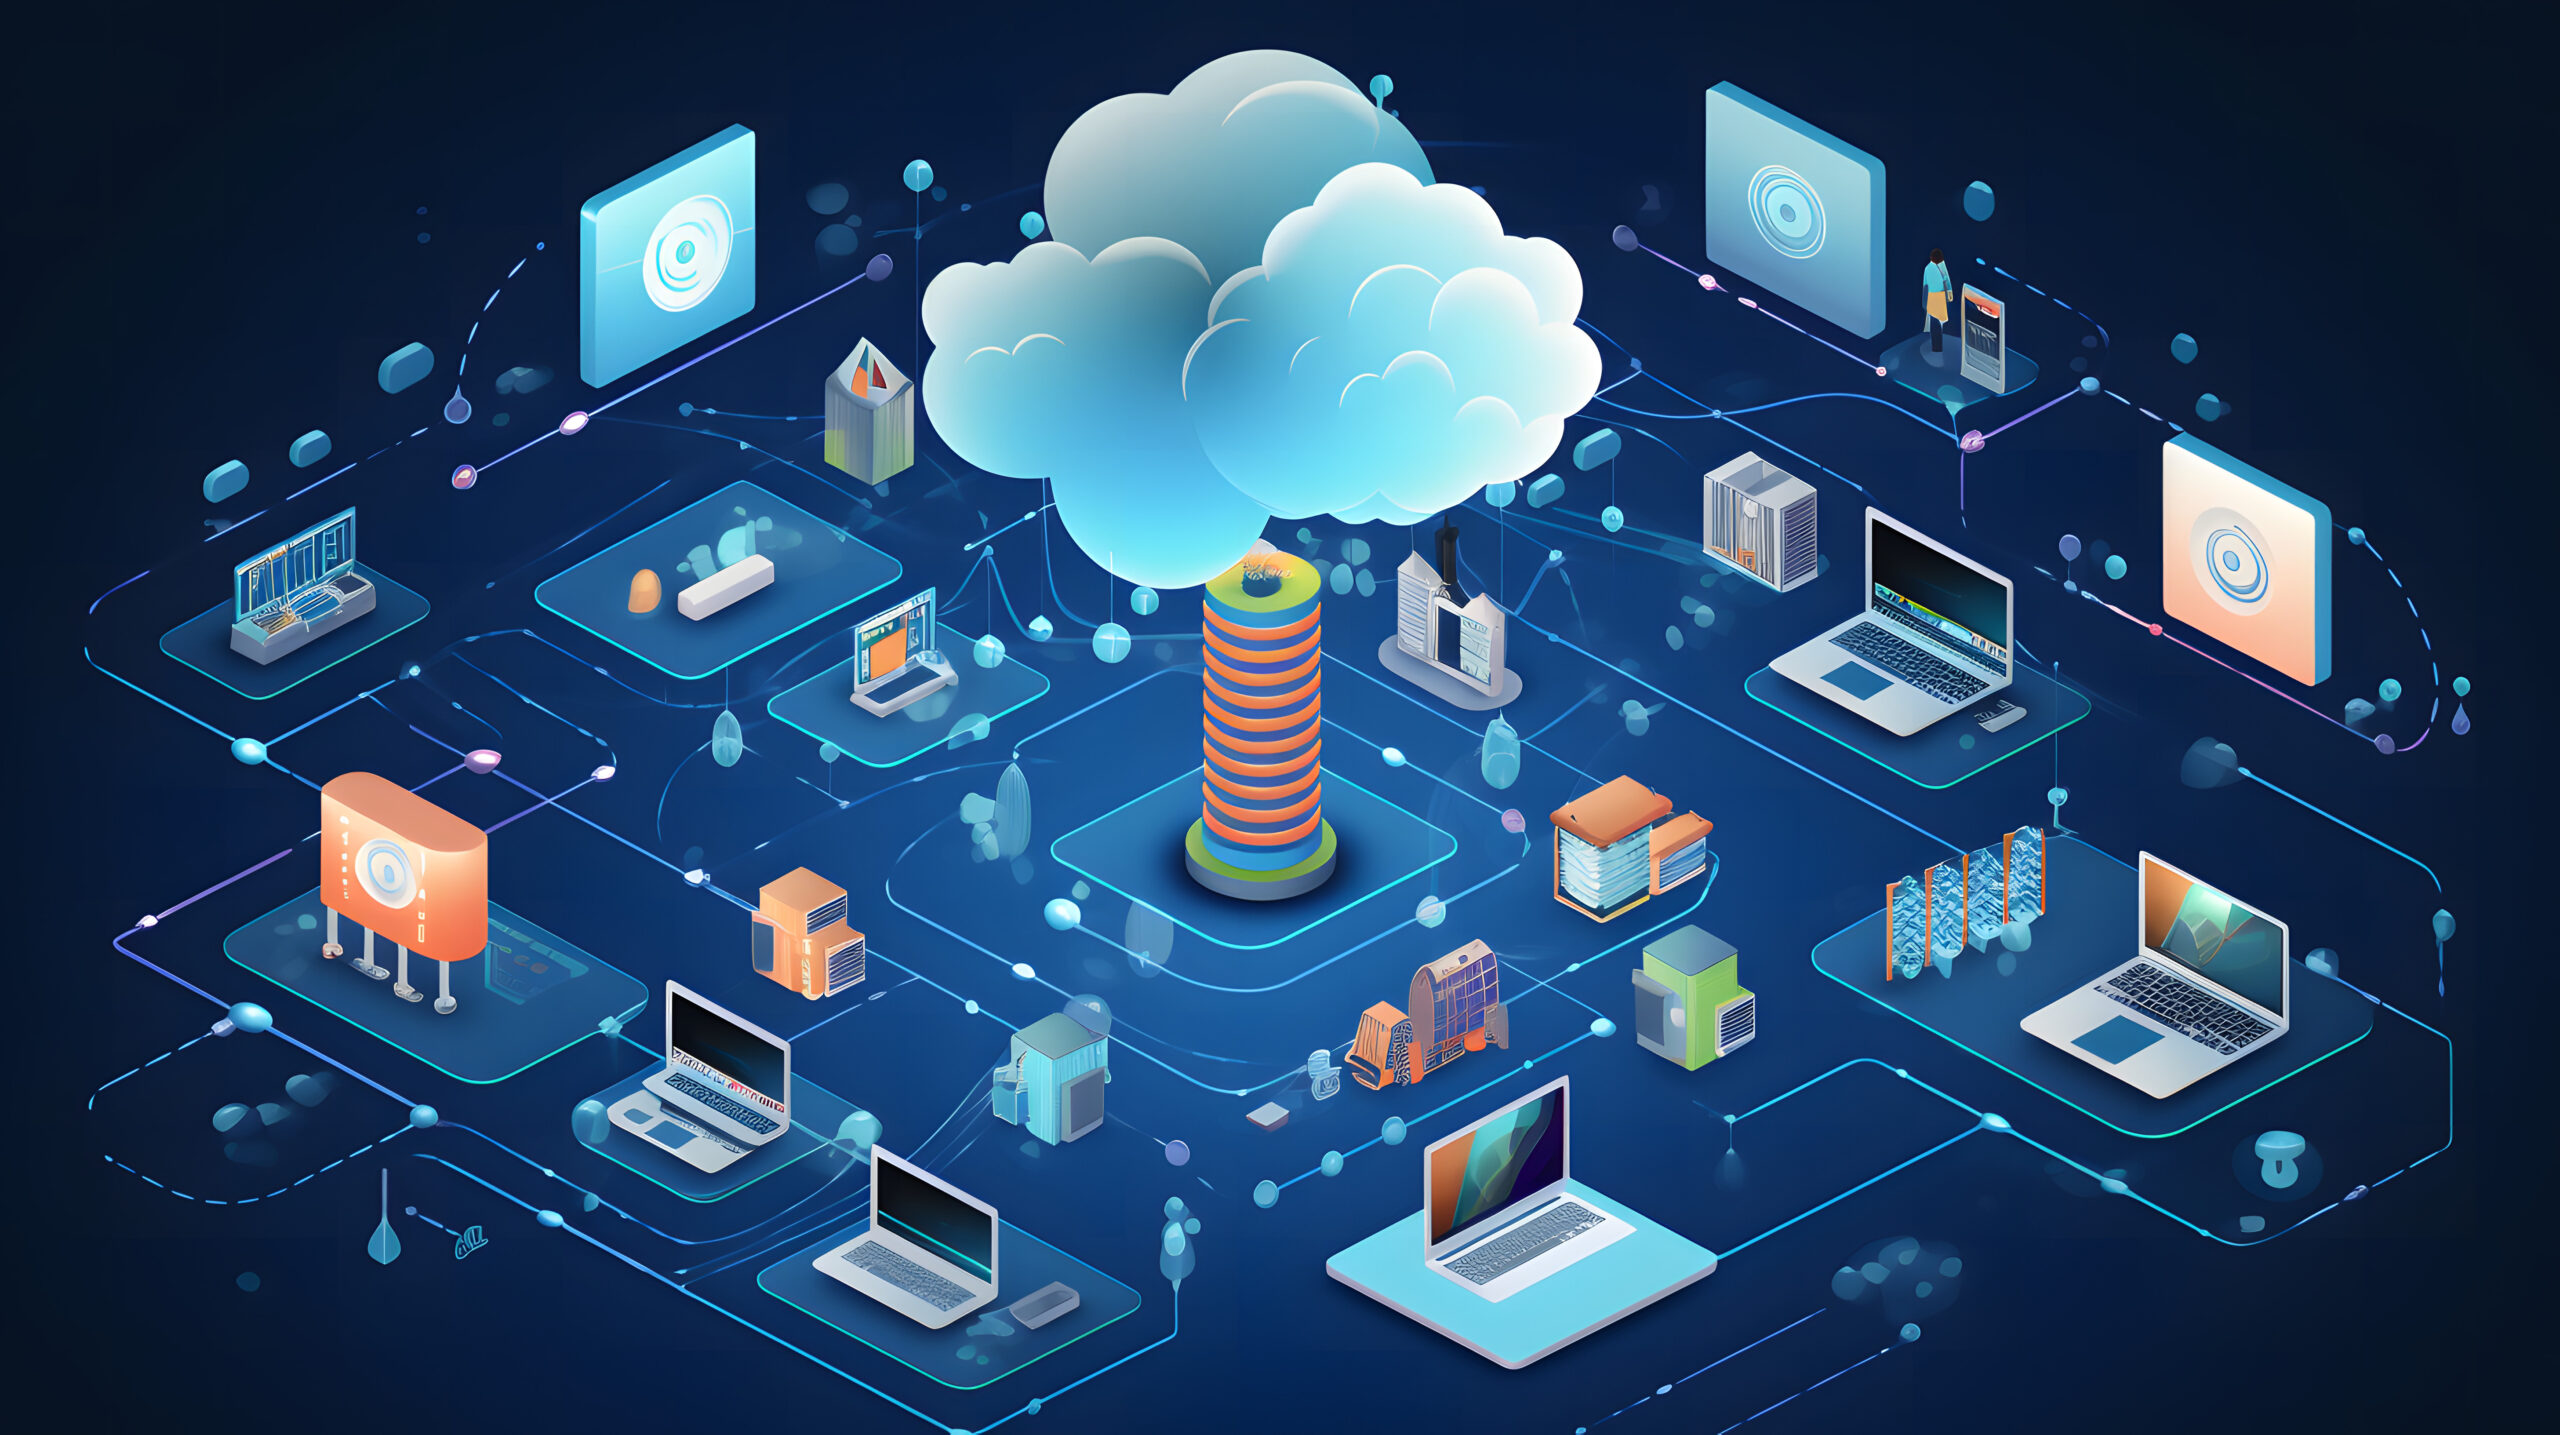 Educational illustration of cloud computing